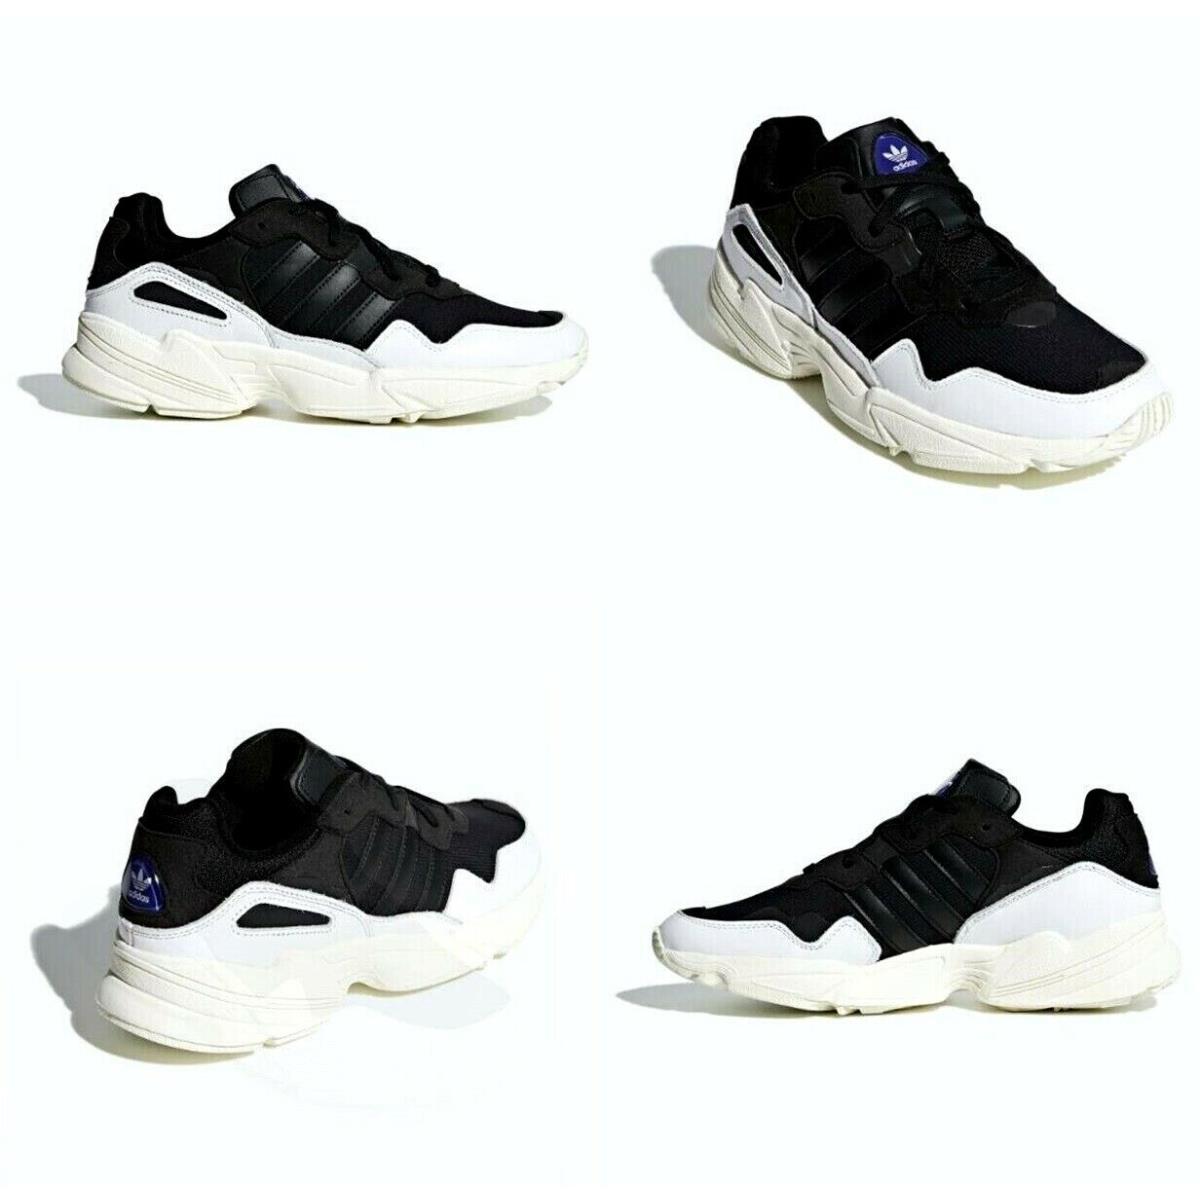 Adidas YUNG-96 Retro Runner Shoes White / Black / White Mens Size 9 F97177